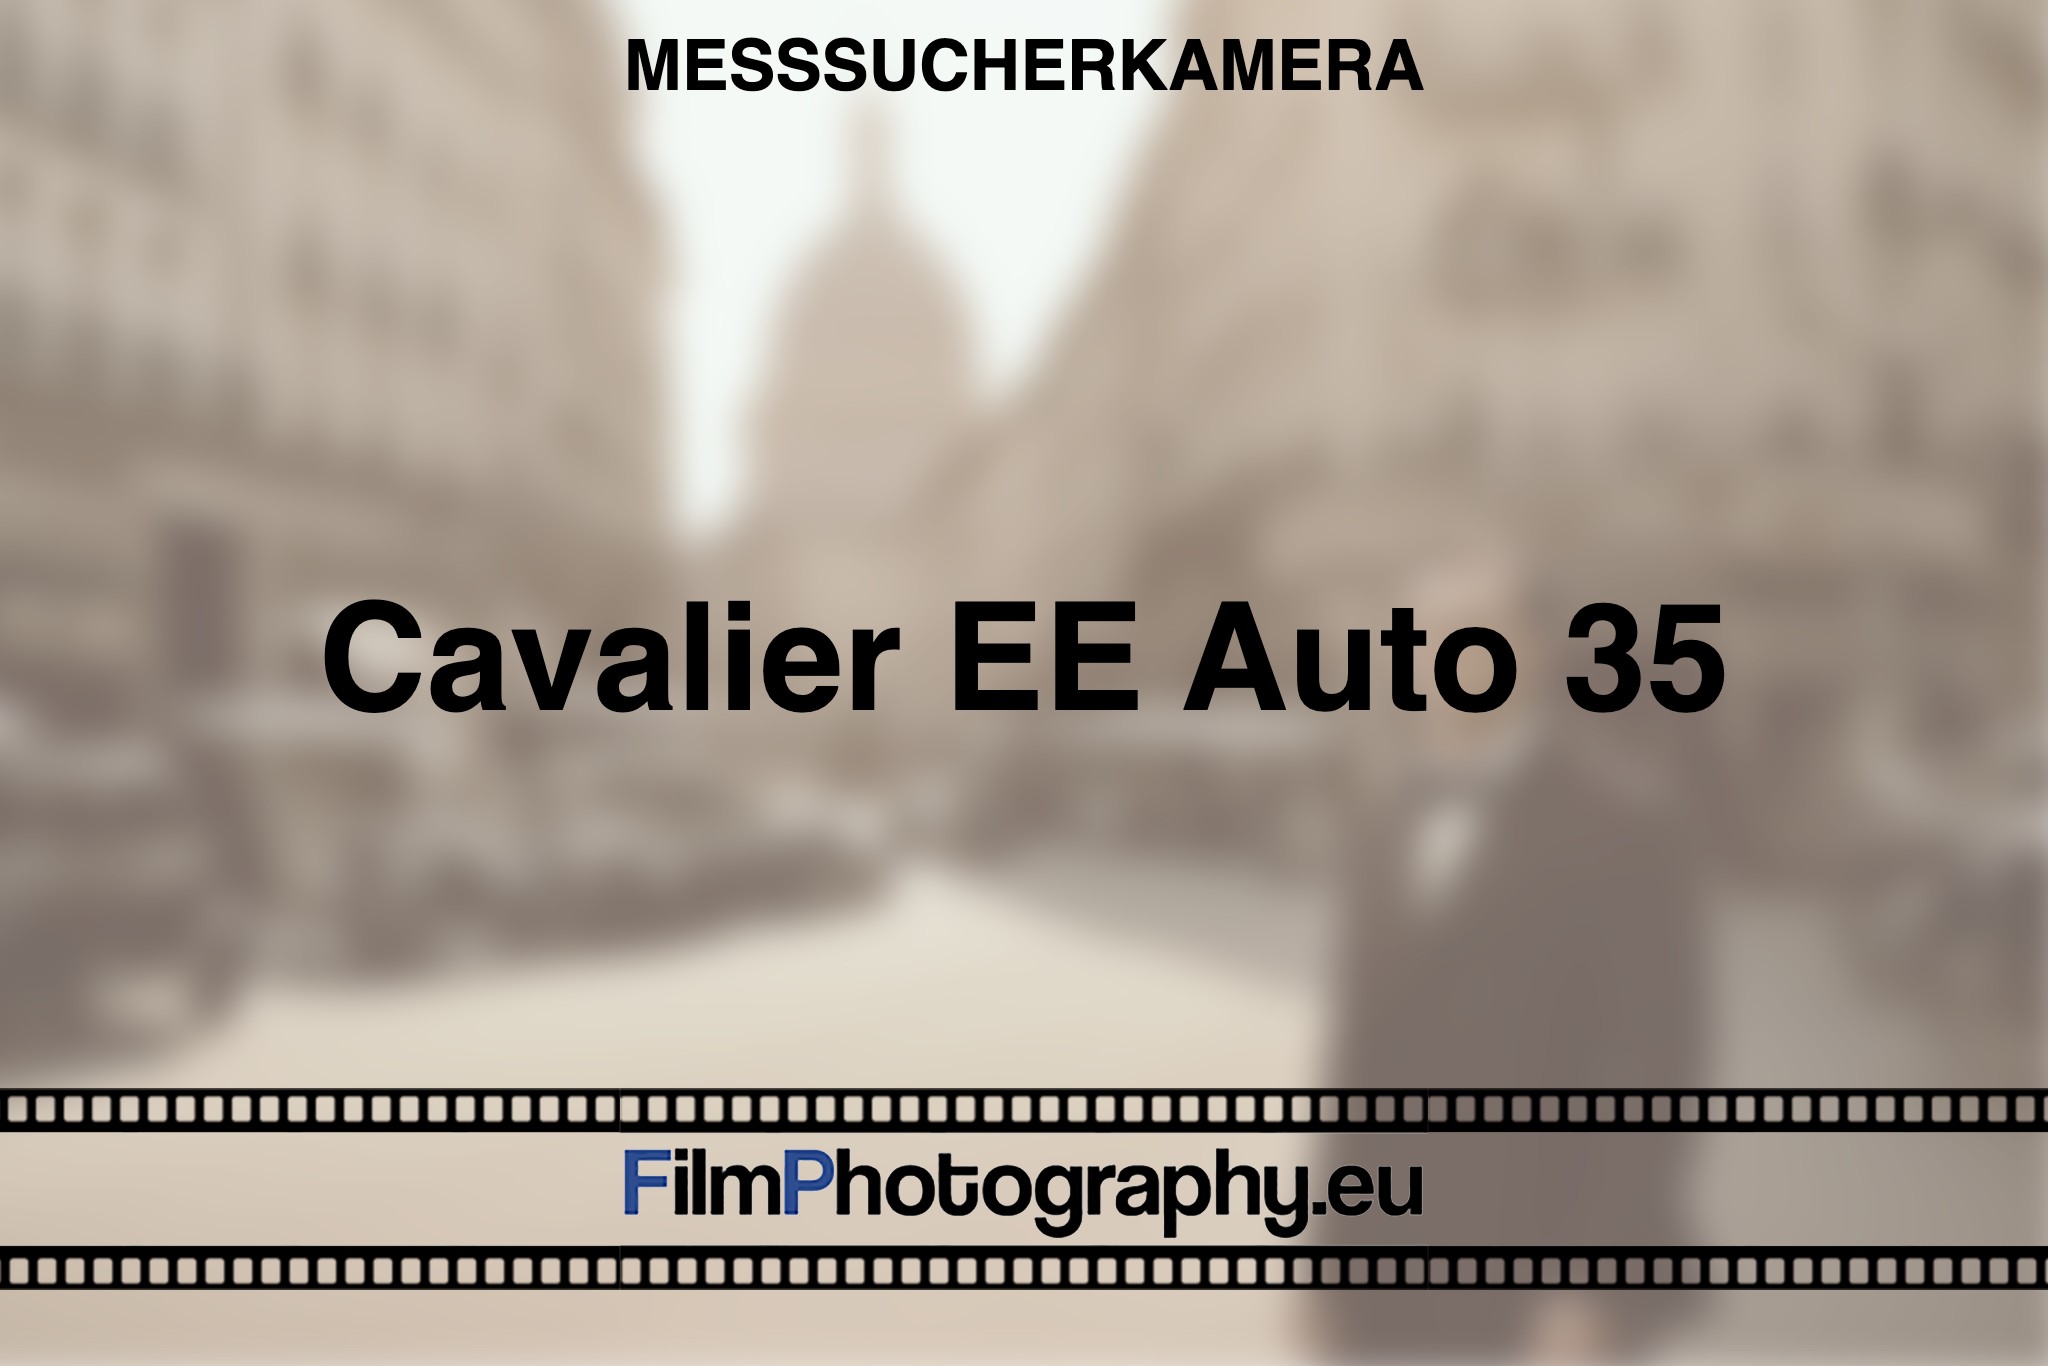 cavalier-ee-auto-35-messsucherkamera-bnv